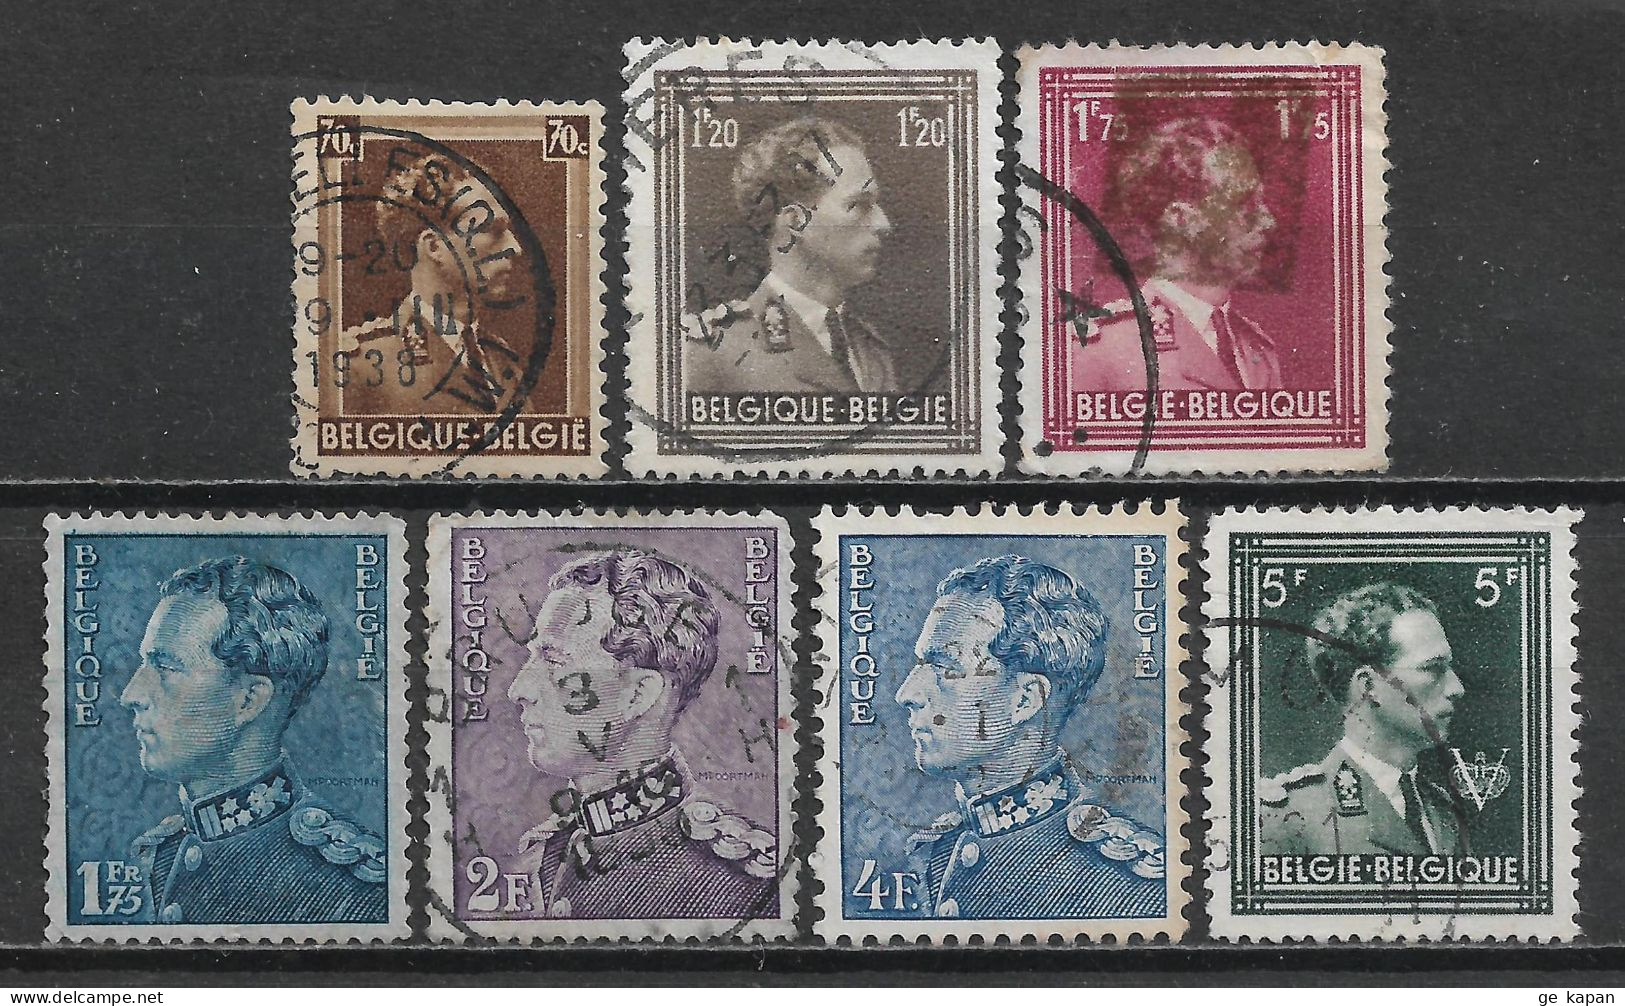 1936-1951 BELGIUM Set Of 7 USED STAMPS (Scott # 283,285,288,295,296,305,352) CV $6.30 - 1936-1951 Poortman